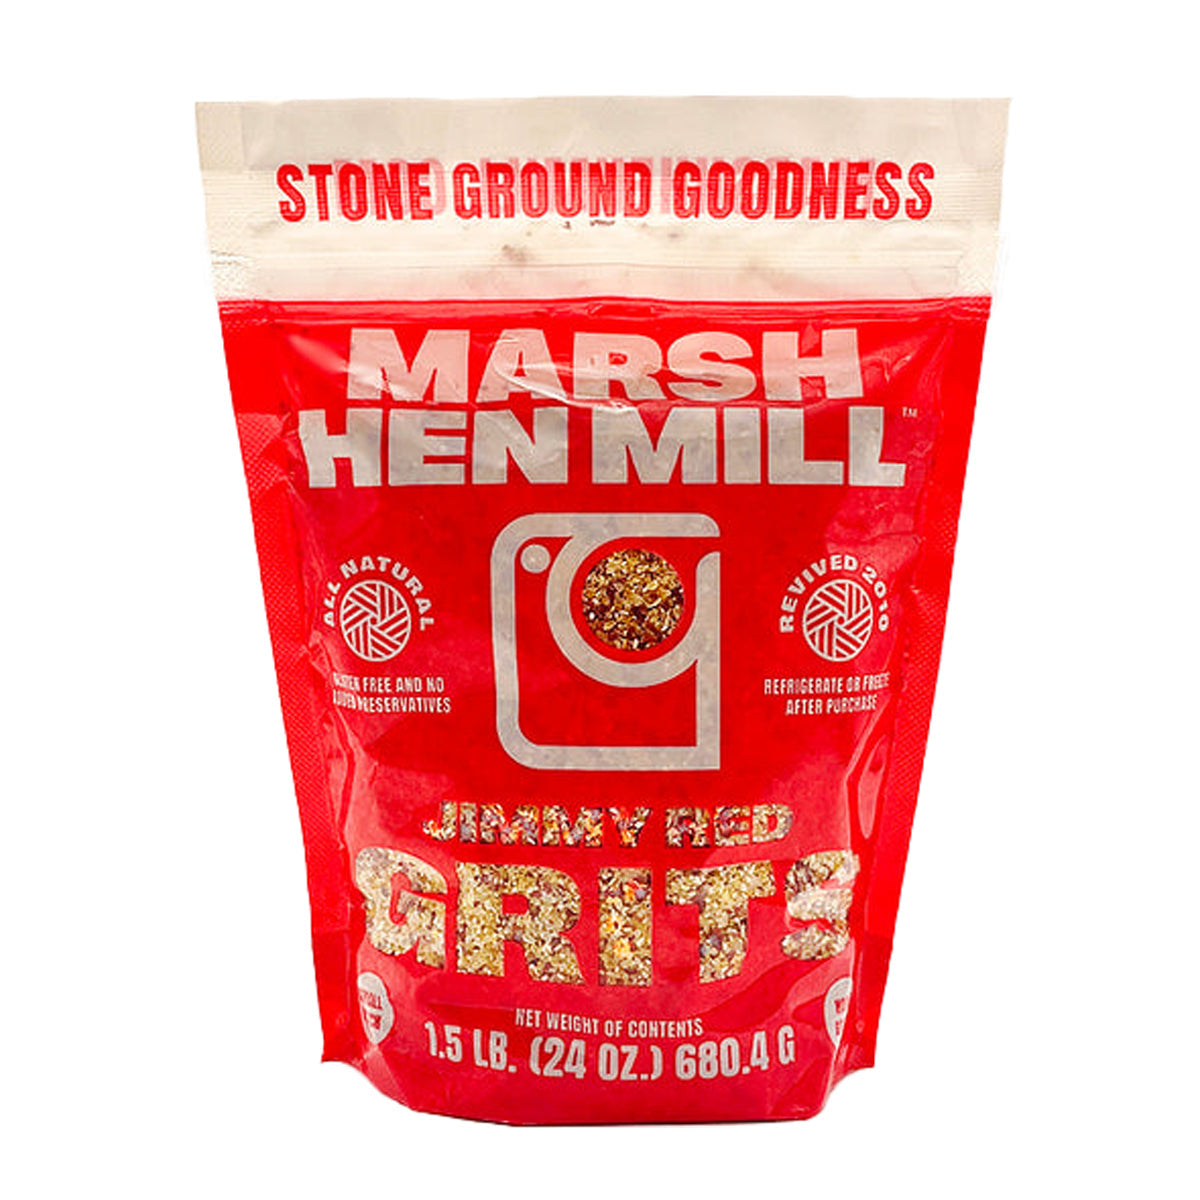 Marsh Hen Mill Jimmy Red Grits 1.5 LB